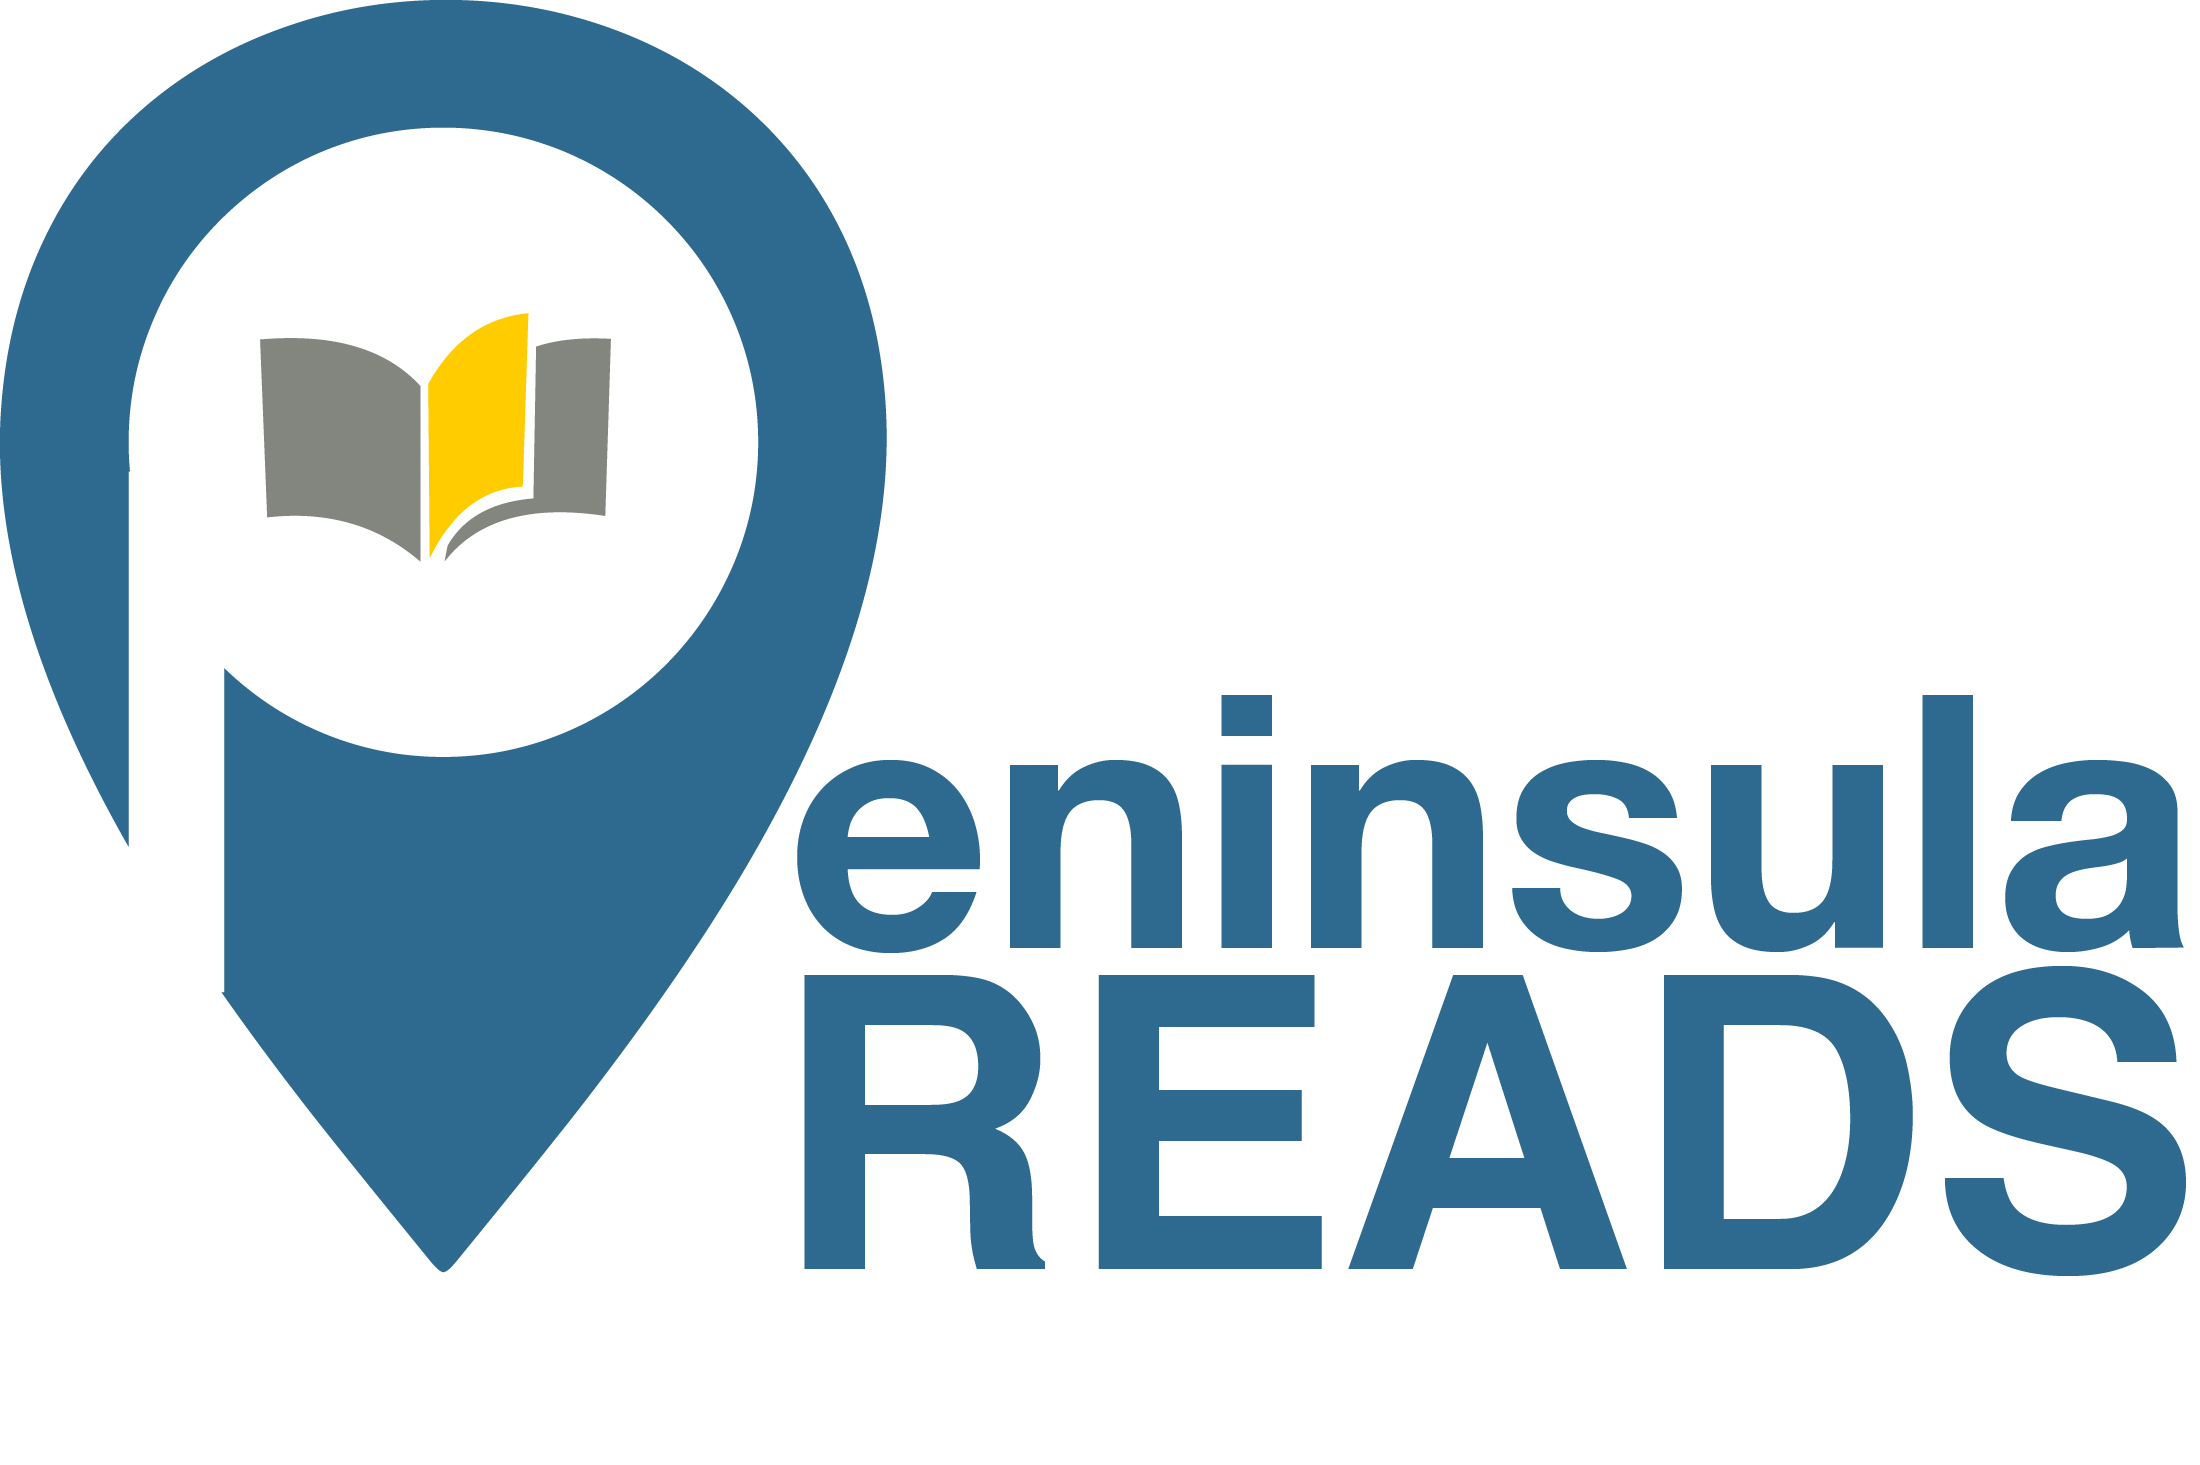 Peninsula Reads logo